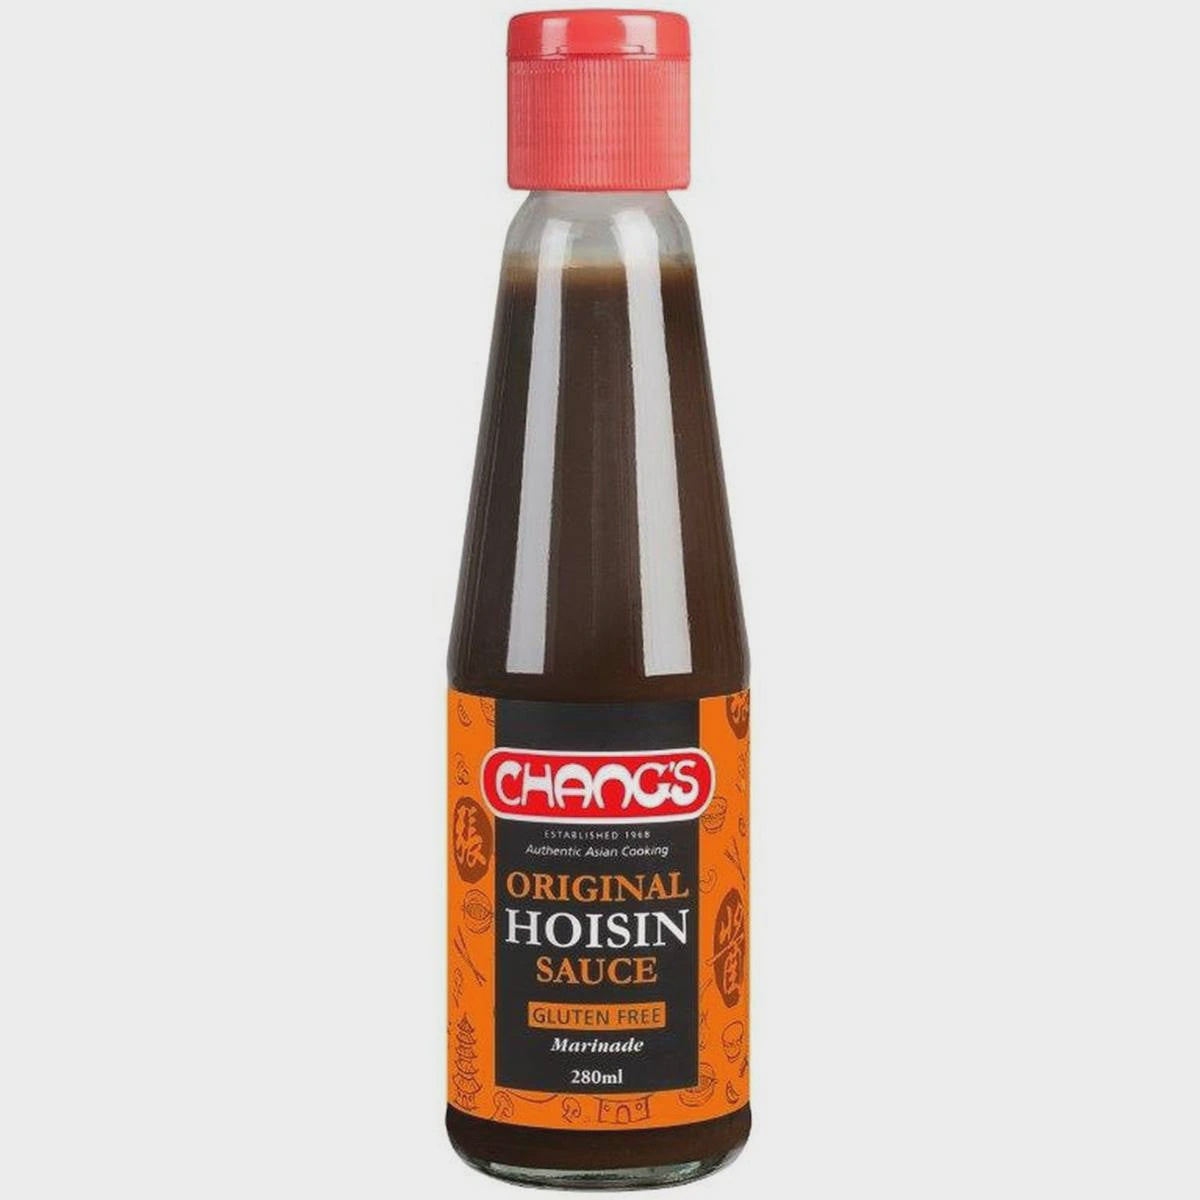 Changs Hoisin Sauce 280ml